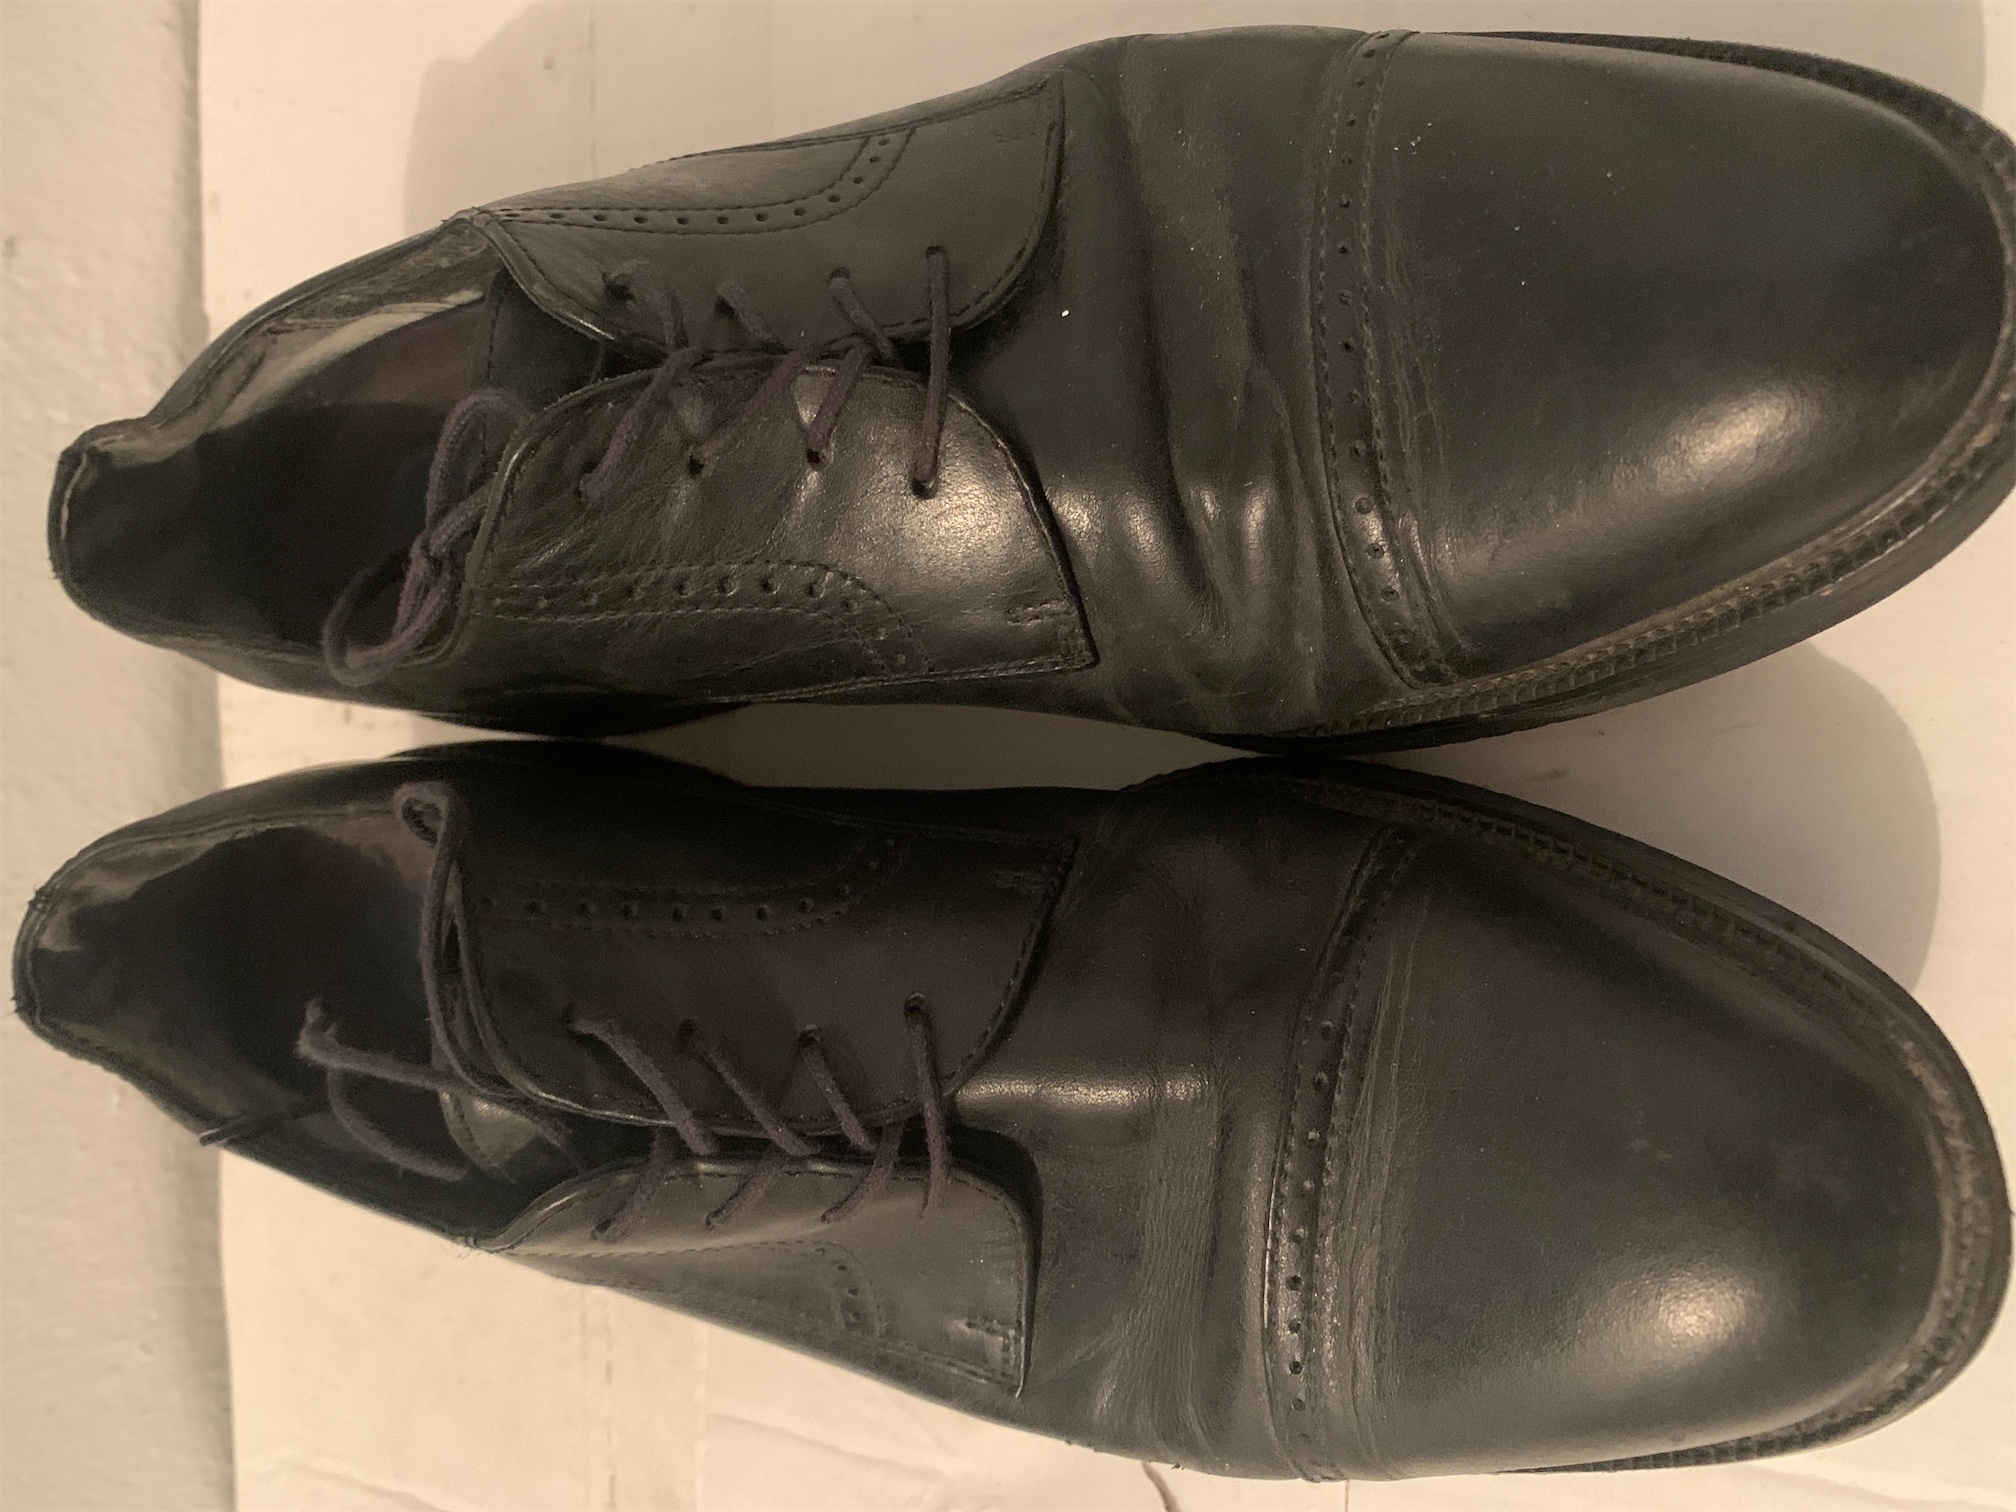 Zapatos de hombre Rockport size 9w color negro